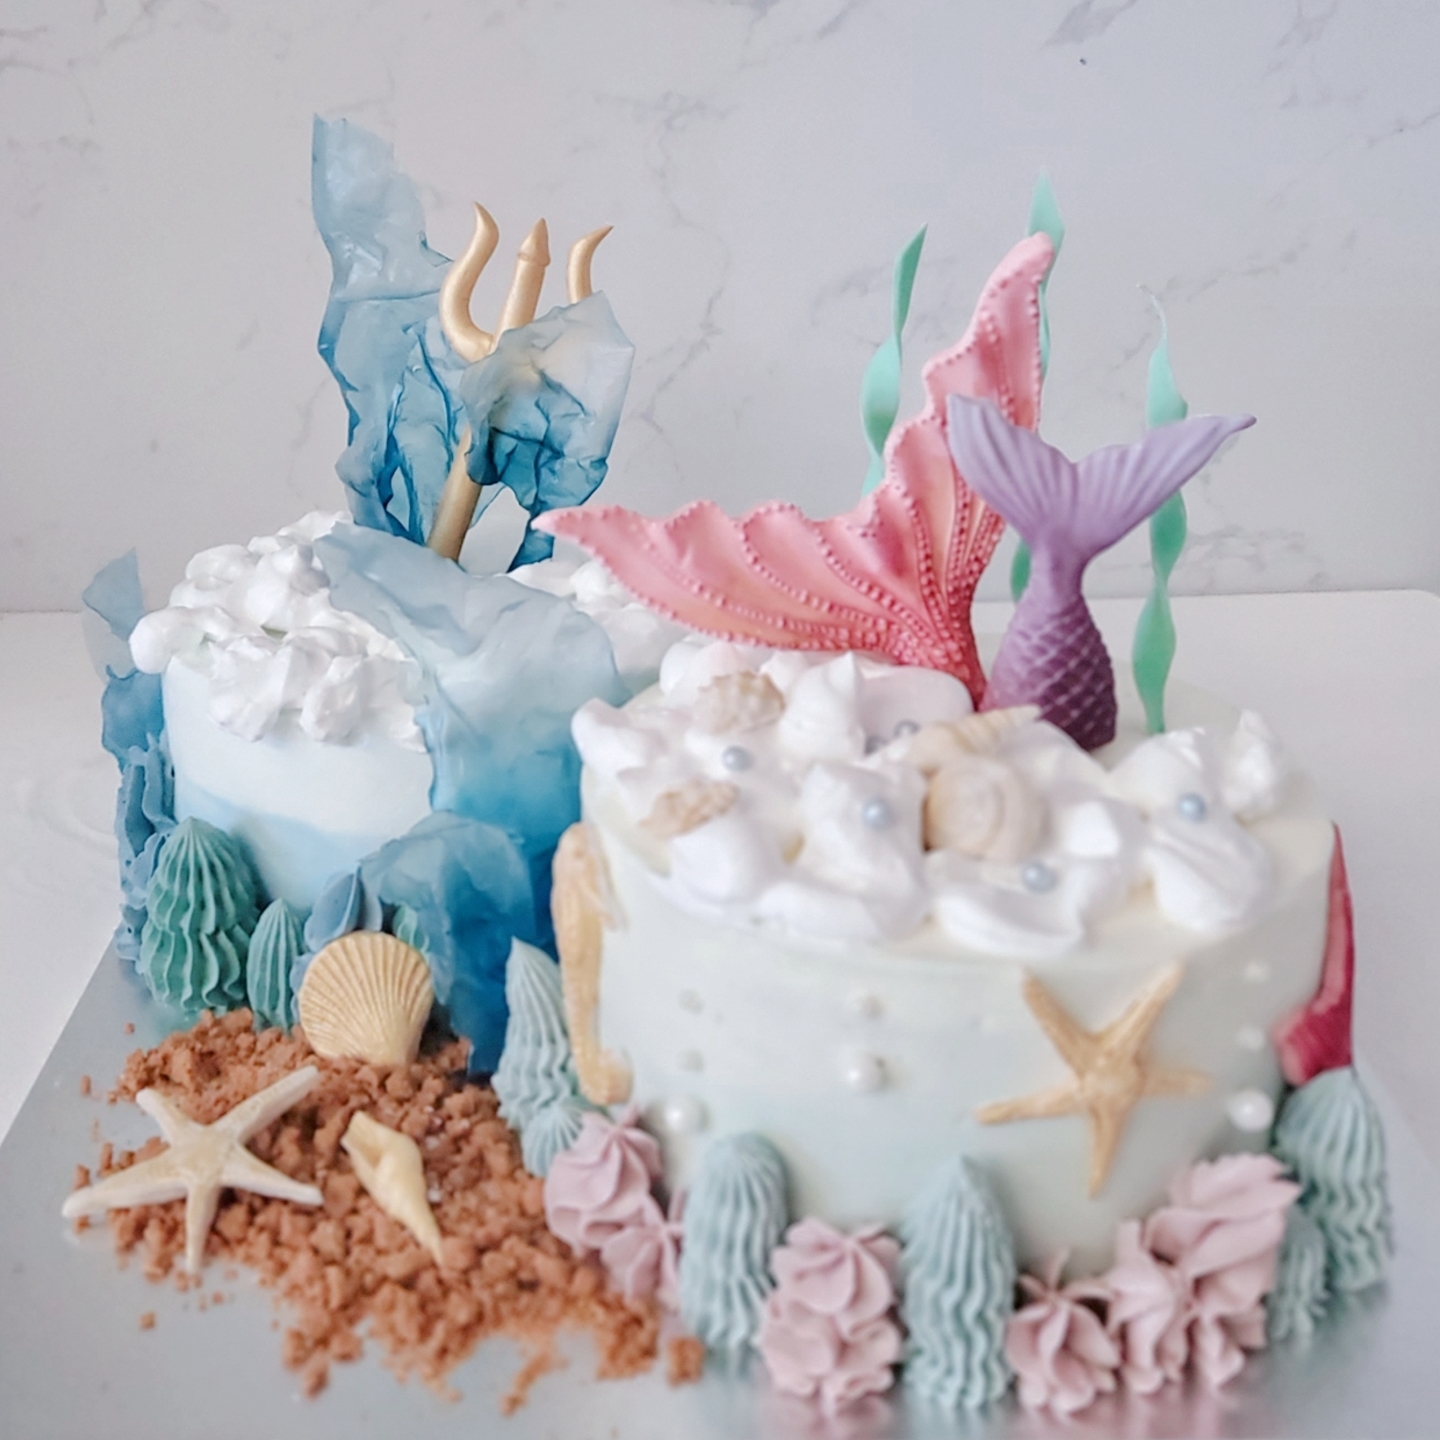 Mermaid & Trident Ocean Themed Duo Cakes